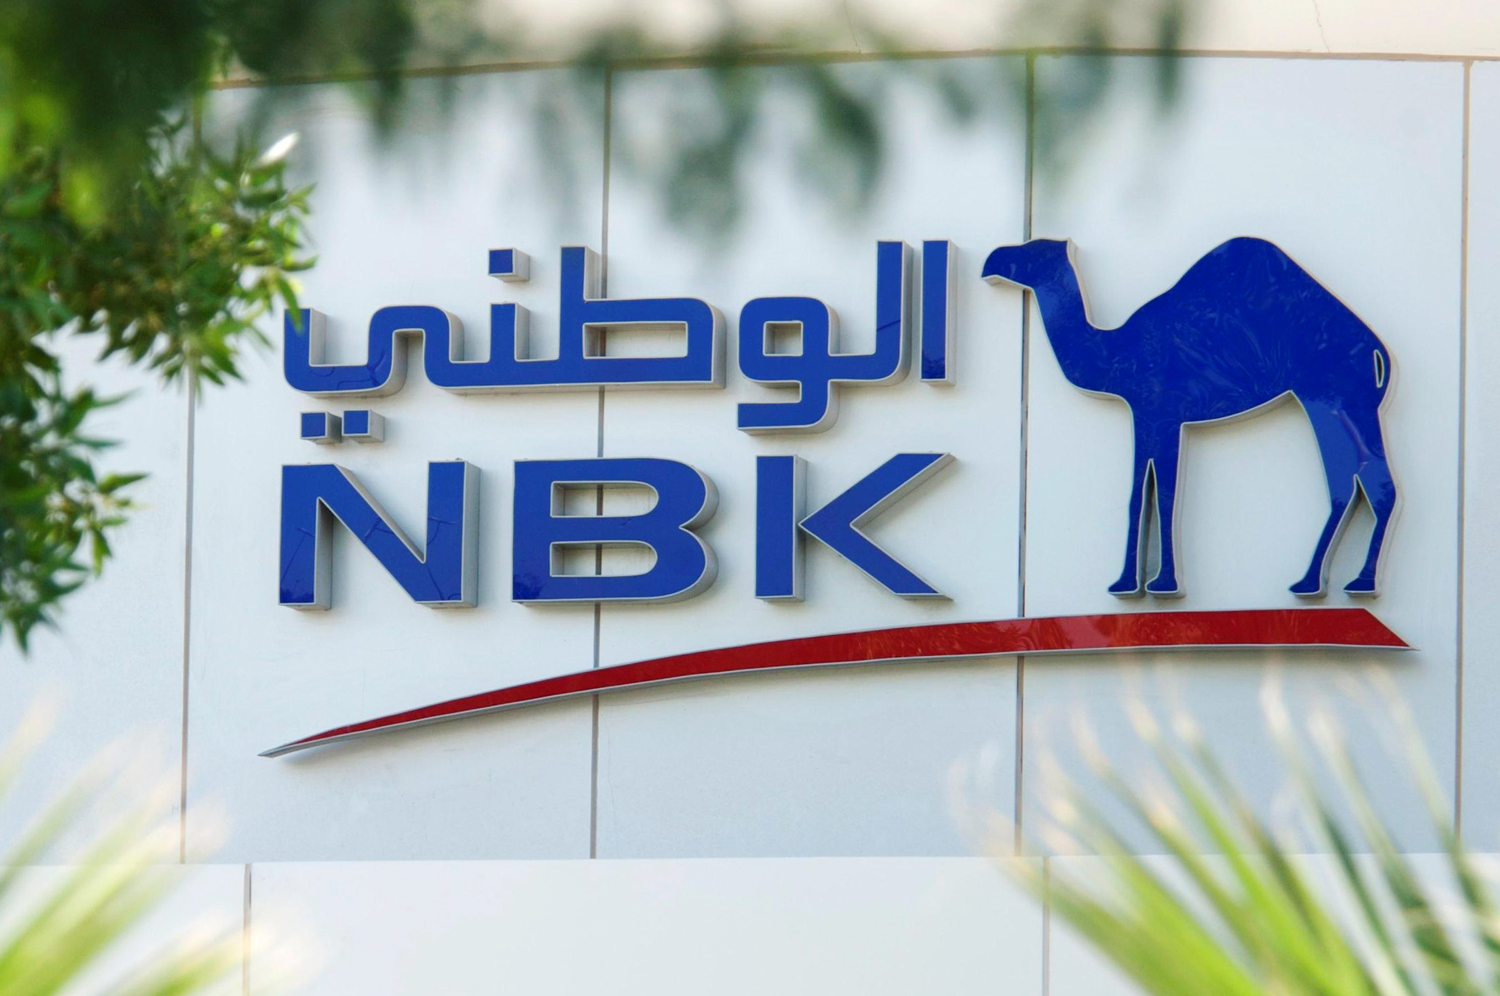 National Bank of Kuwait